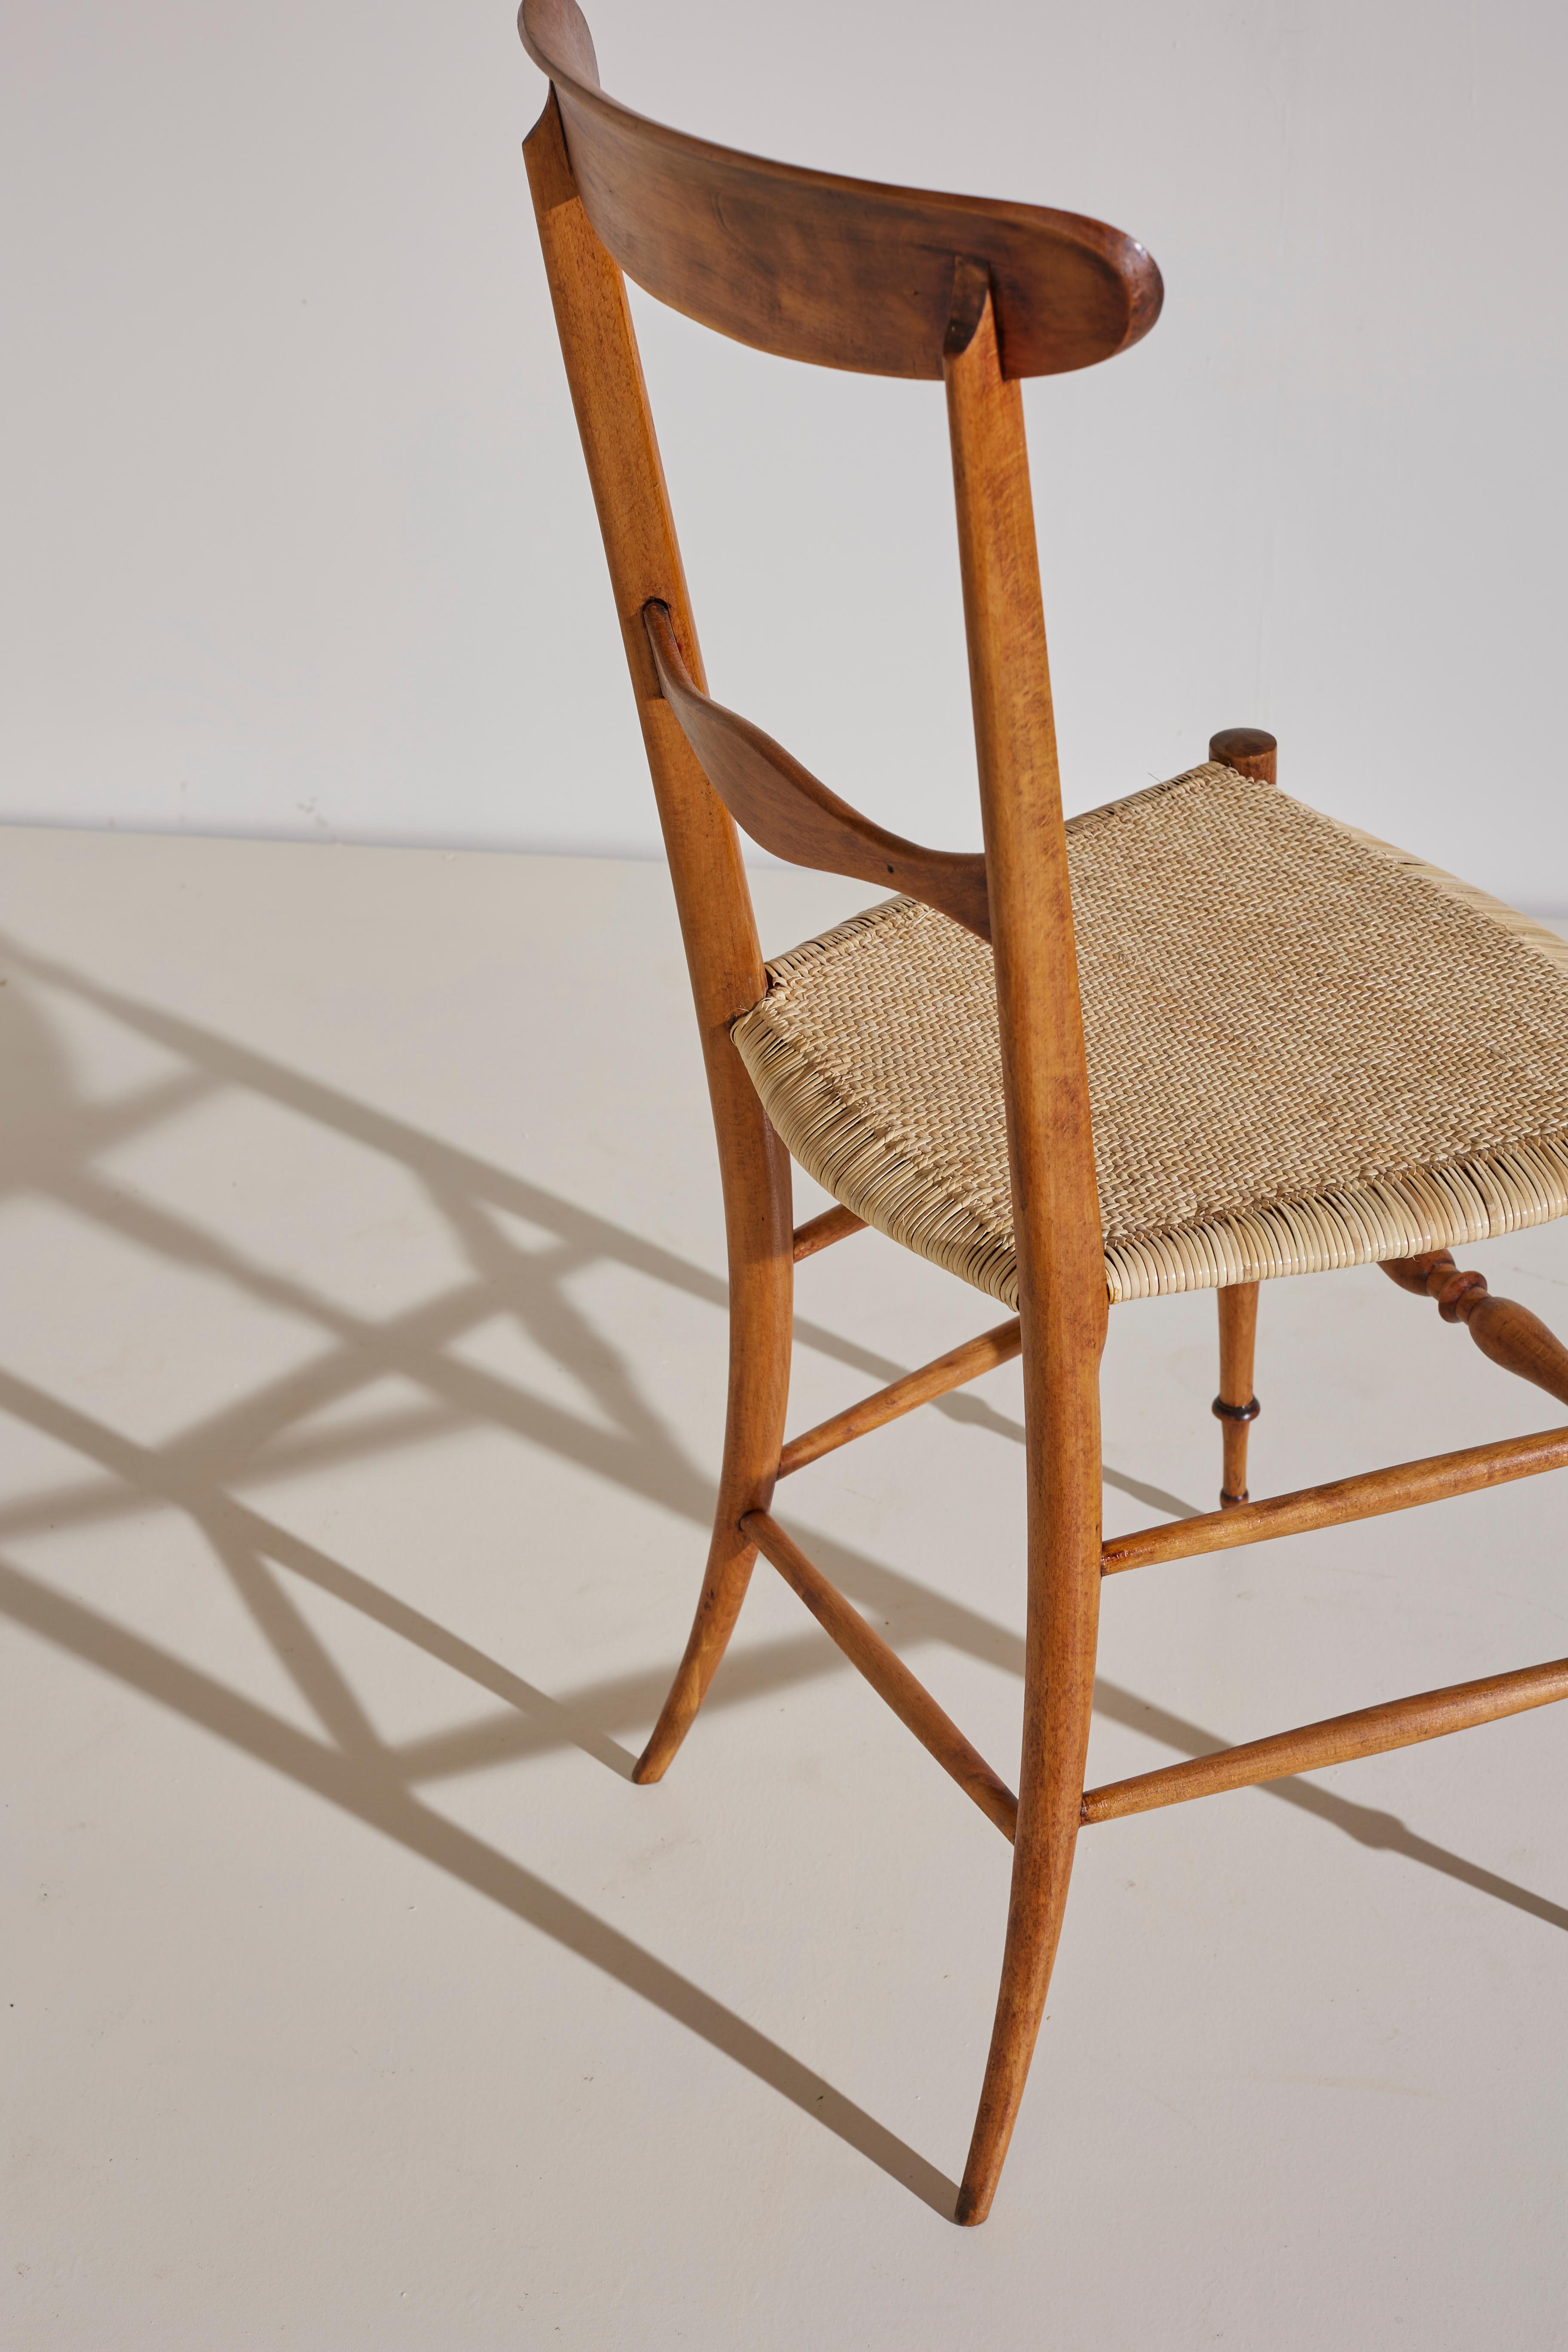 Caning Four Beech Campanino Chairs by Zunino E Rivarola Chiavari, New Woven Cane